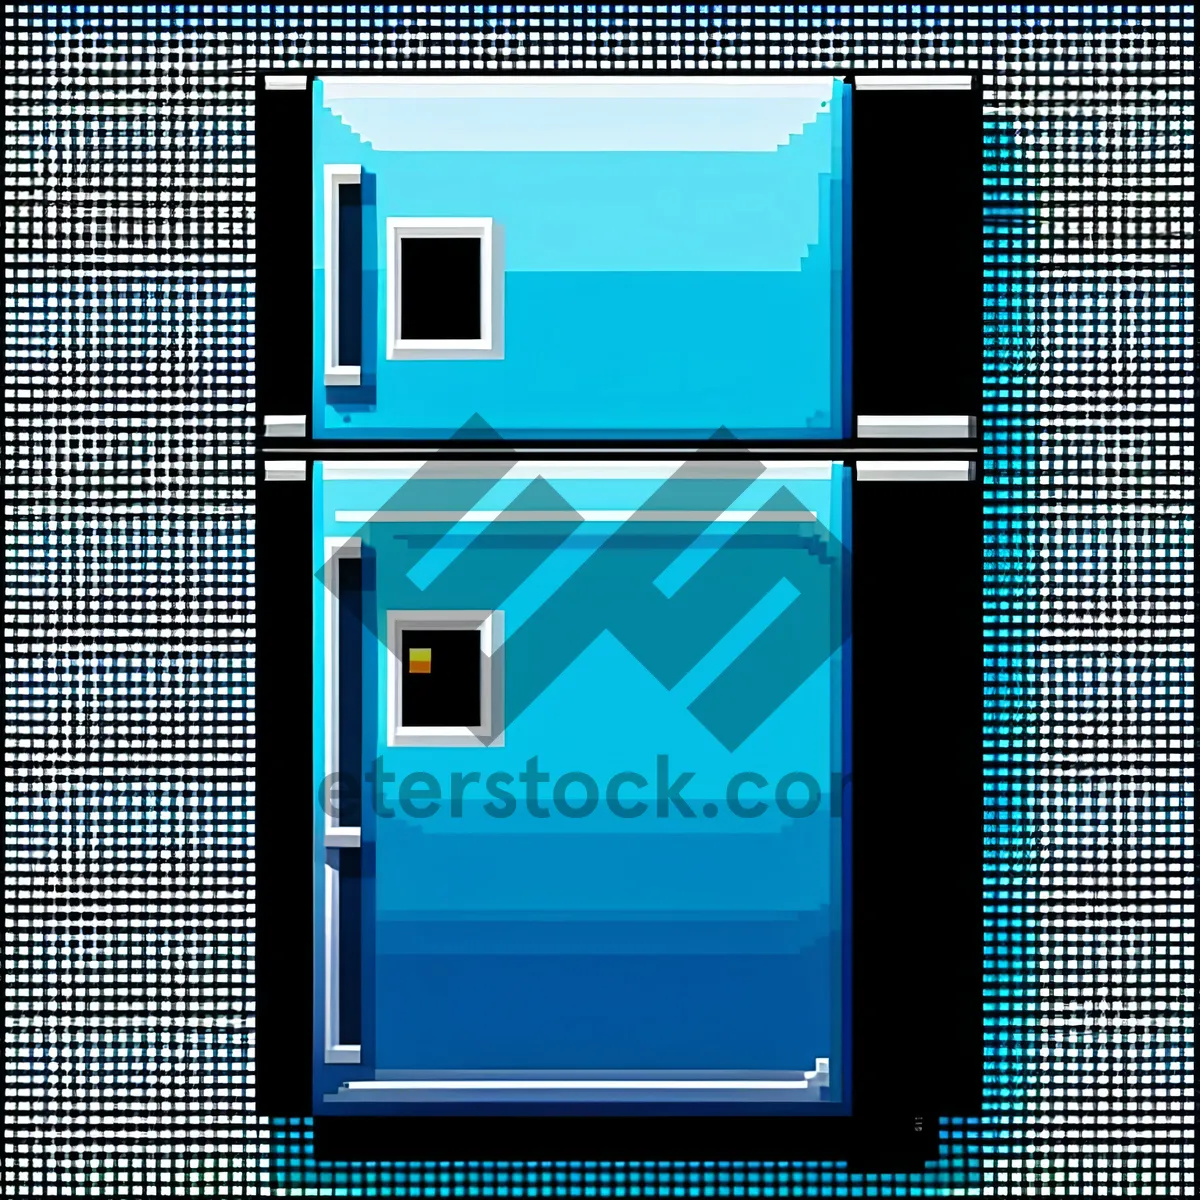 Picture of Secure 3D Web Button Icon - Square Design